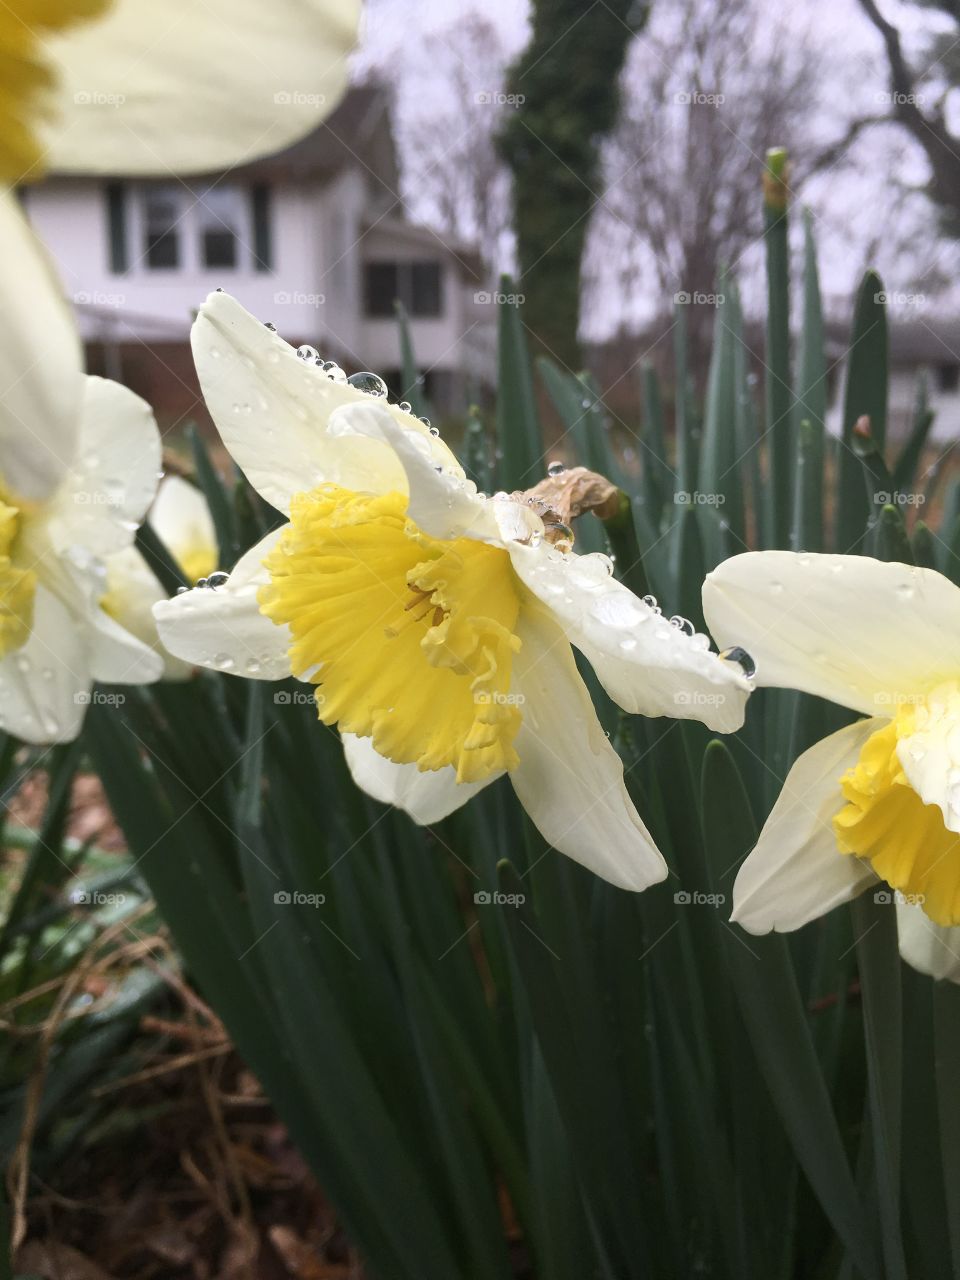 Raindrops on daffodils